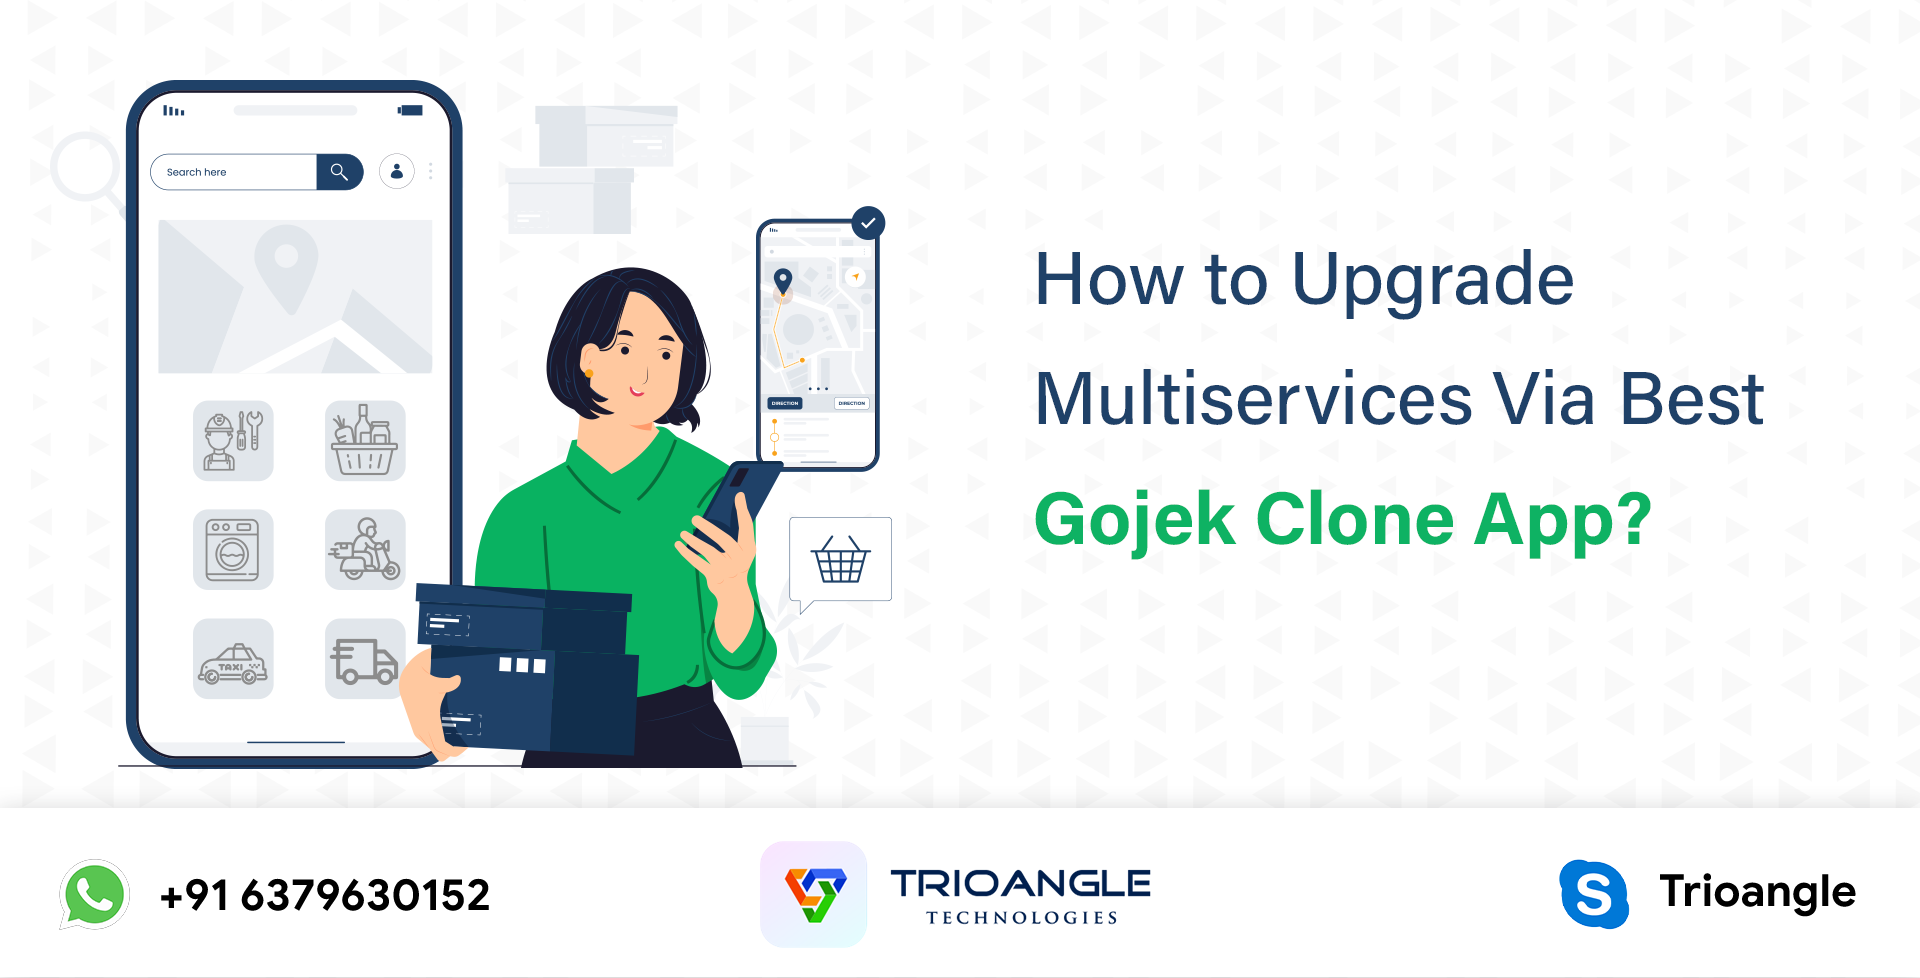 How to Upgrade Multiservices Via Best Gojek Clone App?